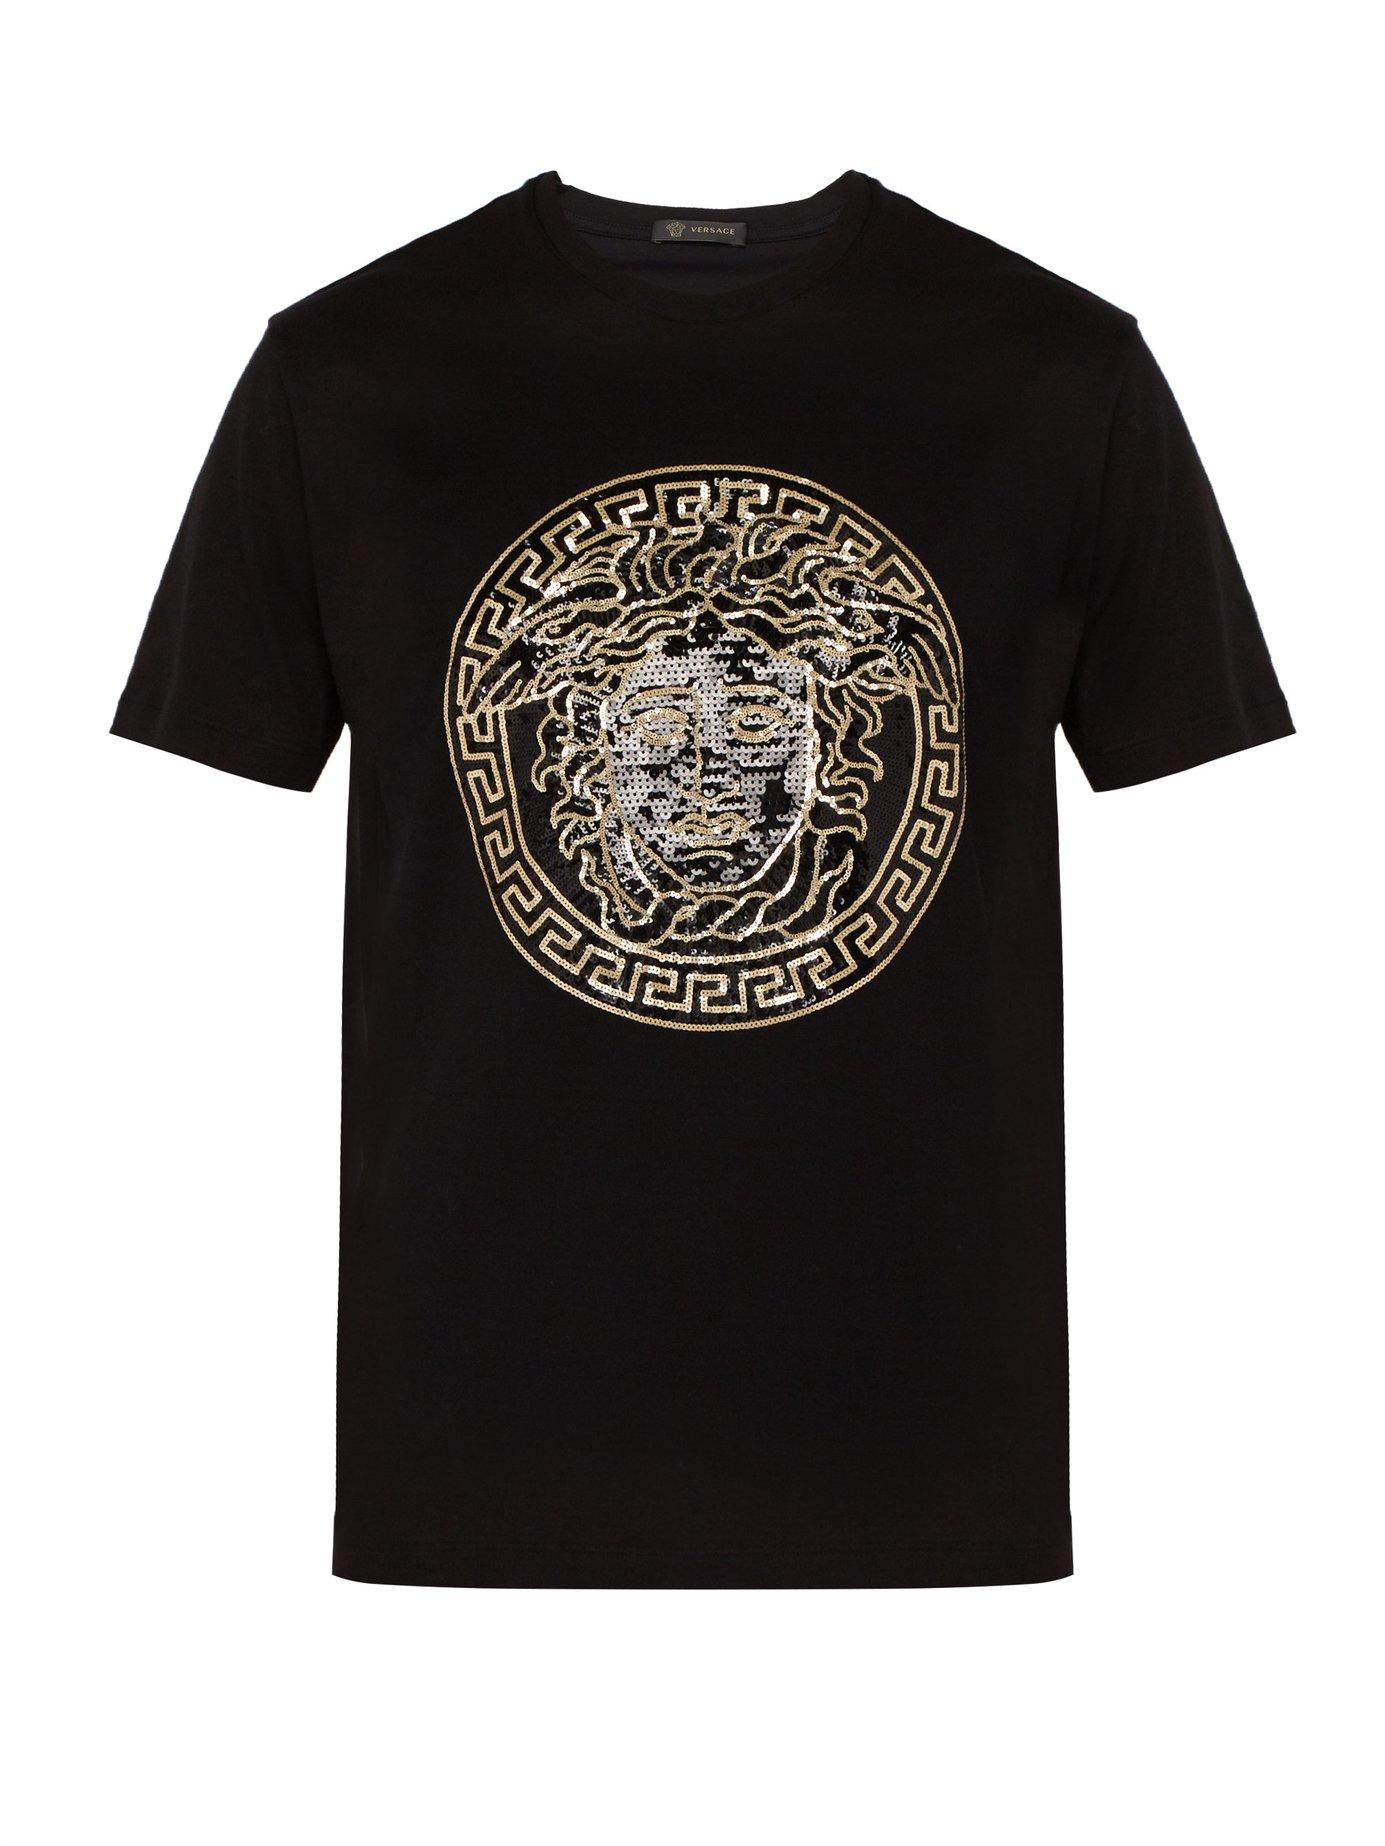 Versace Cotton Medusa Head Sequinned Motif T Shirt in Black for Men - Lyst